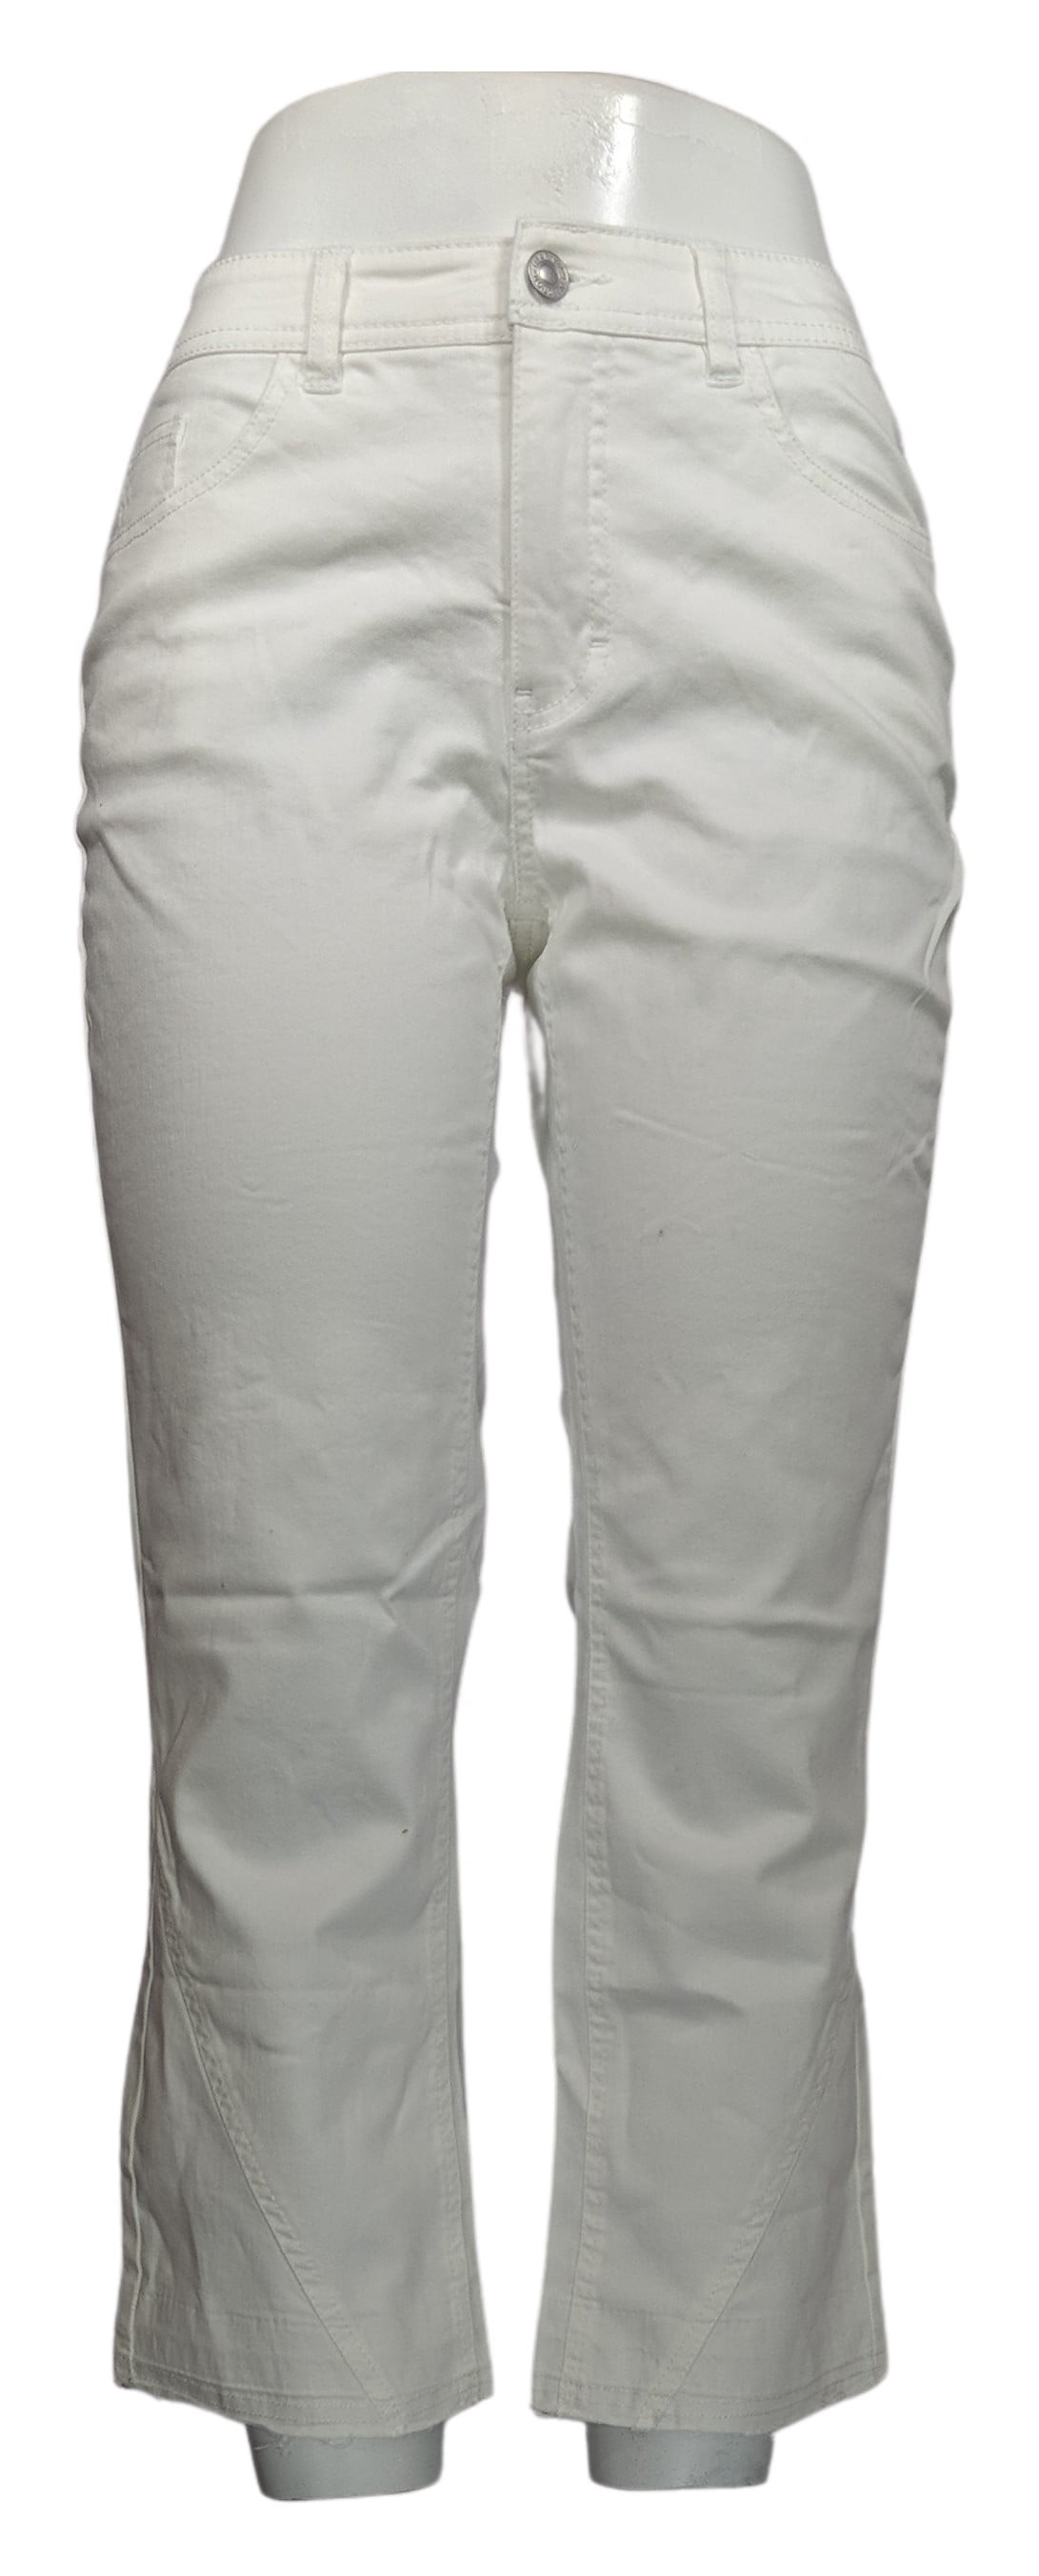 walmart white stag women's jeans